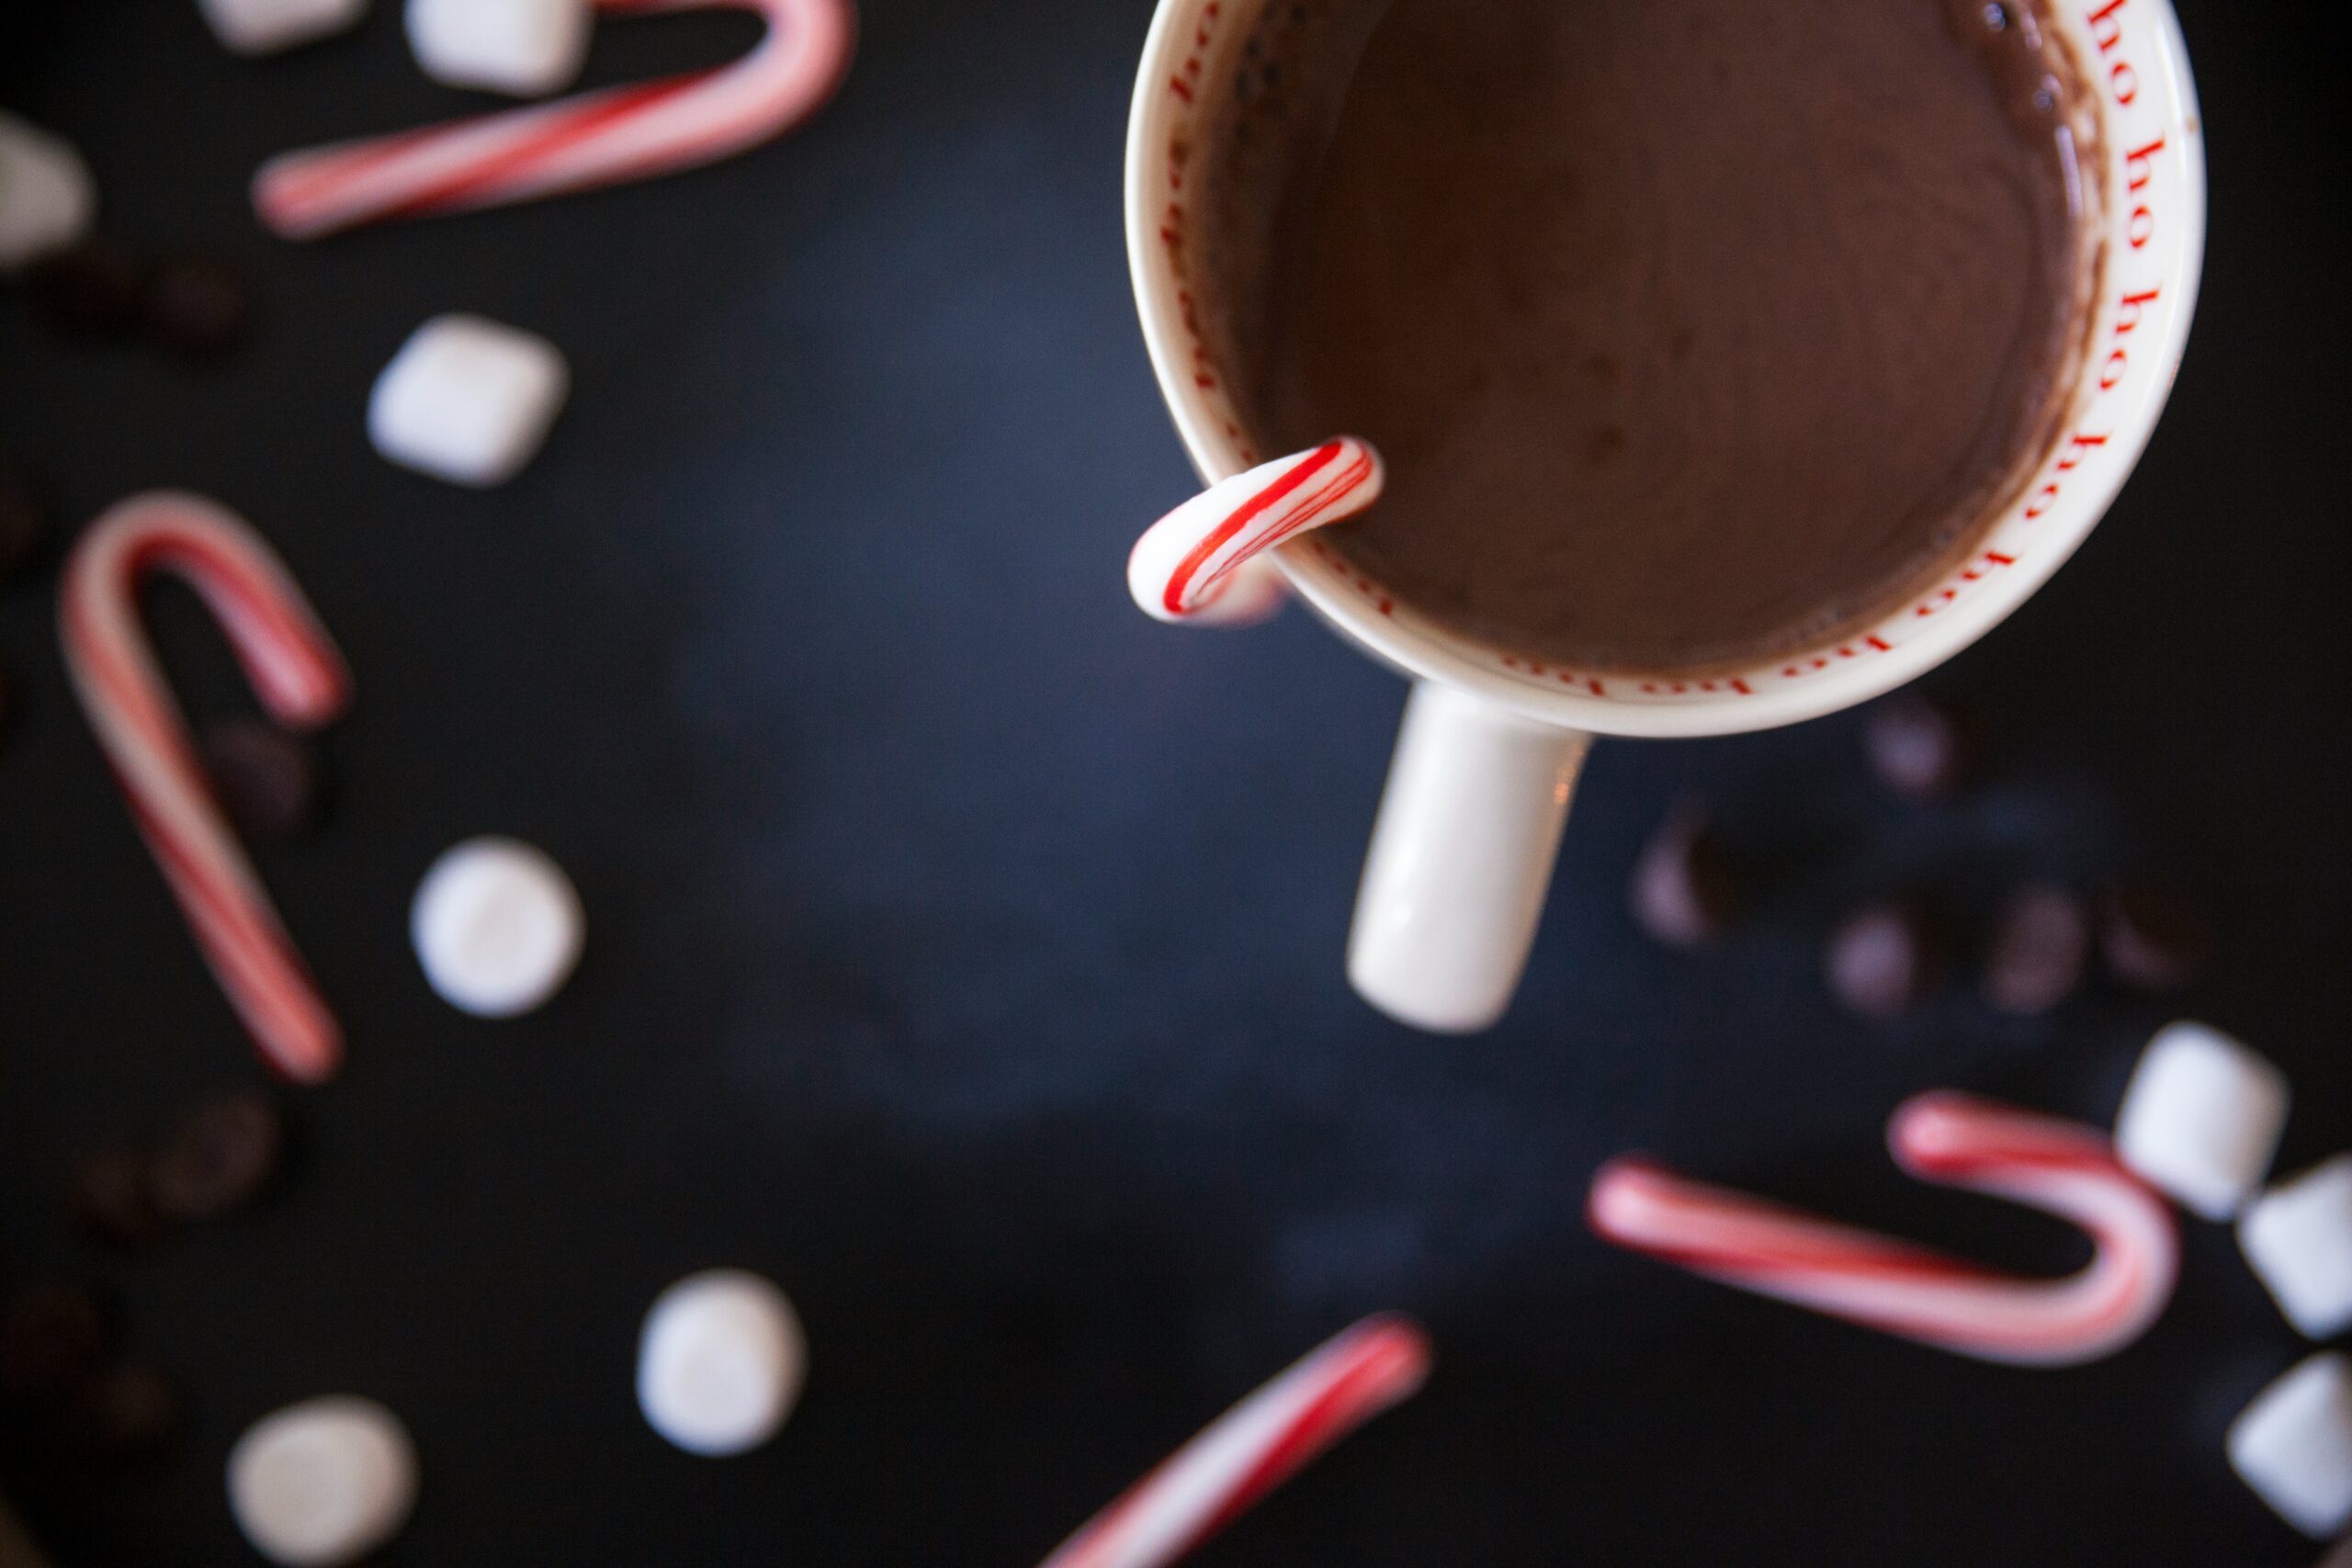 Photo of hot chocolate taken from unsplash.